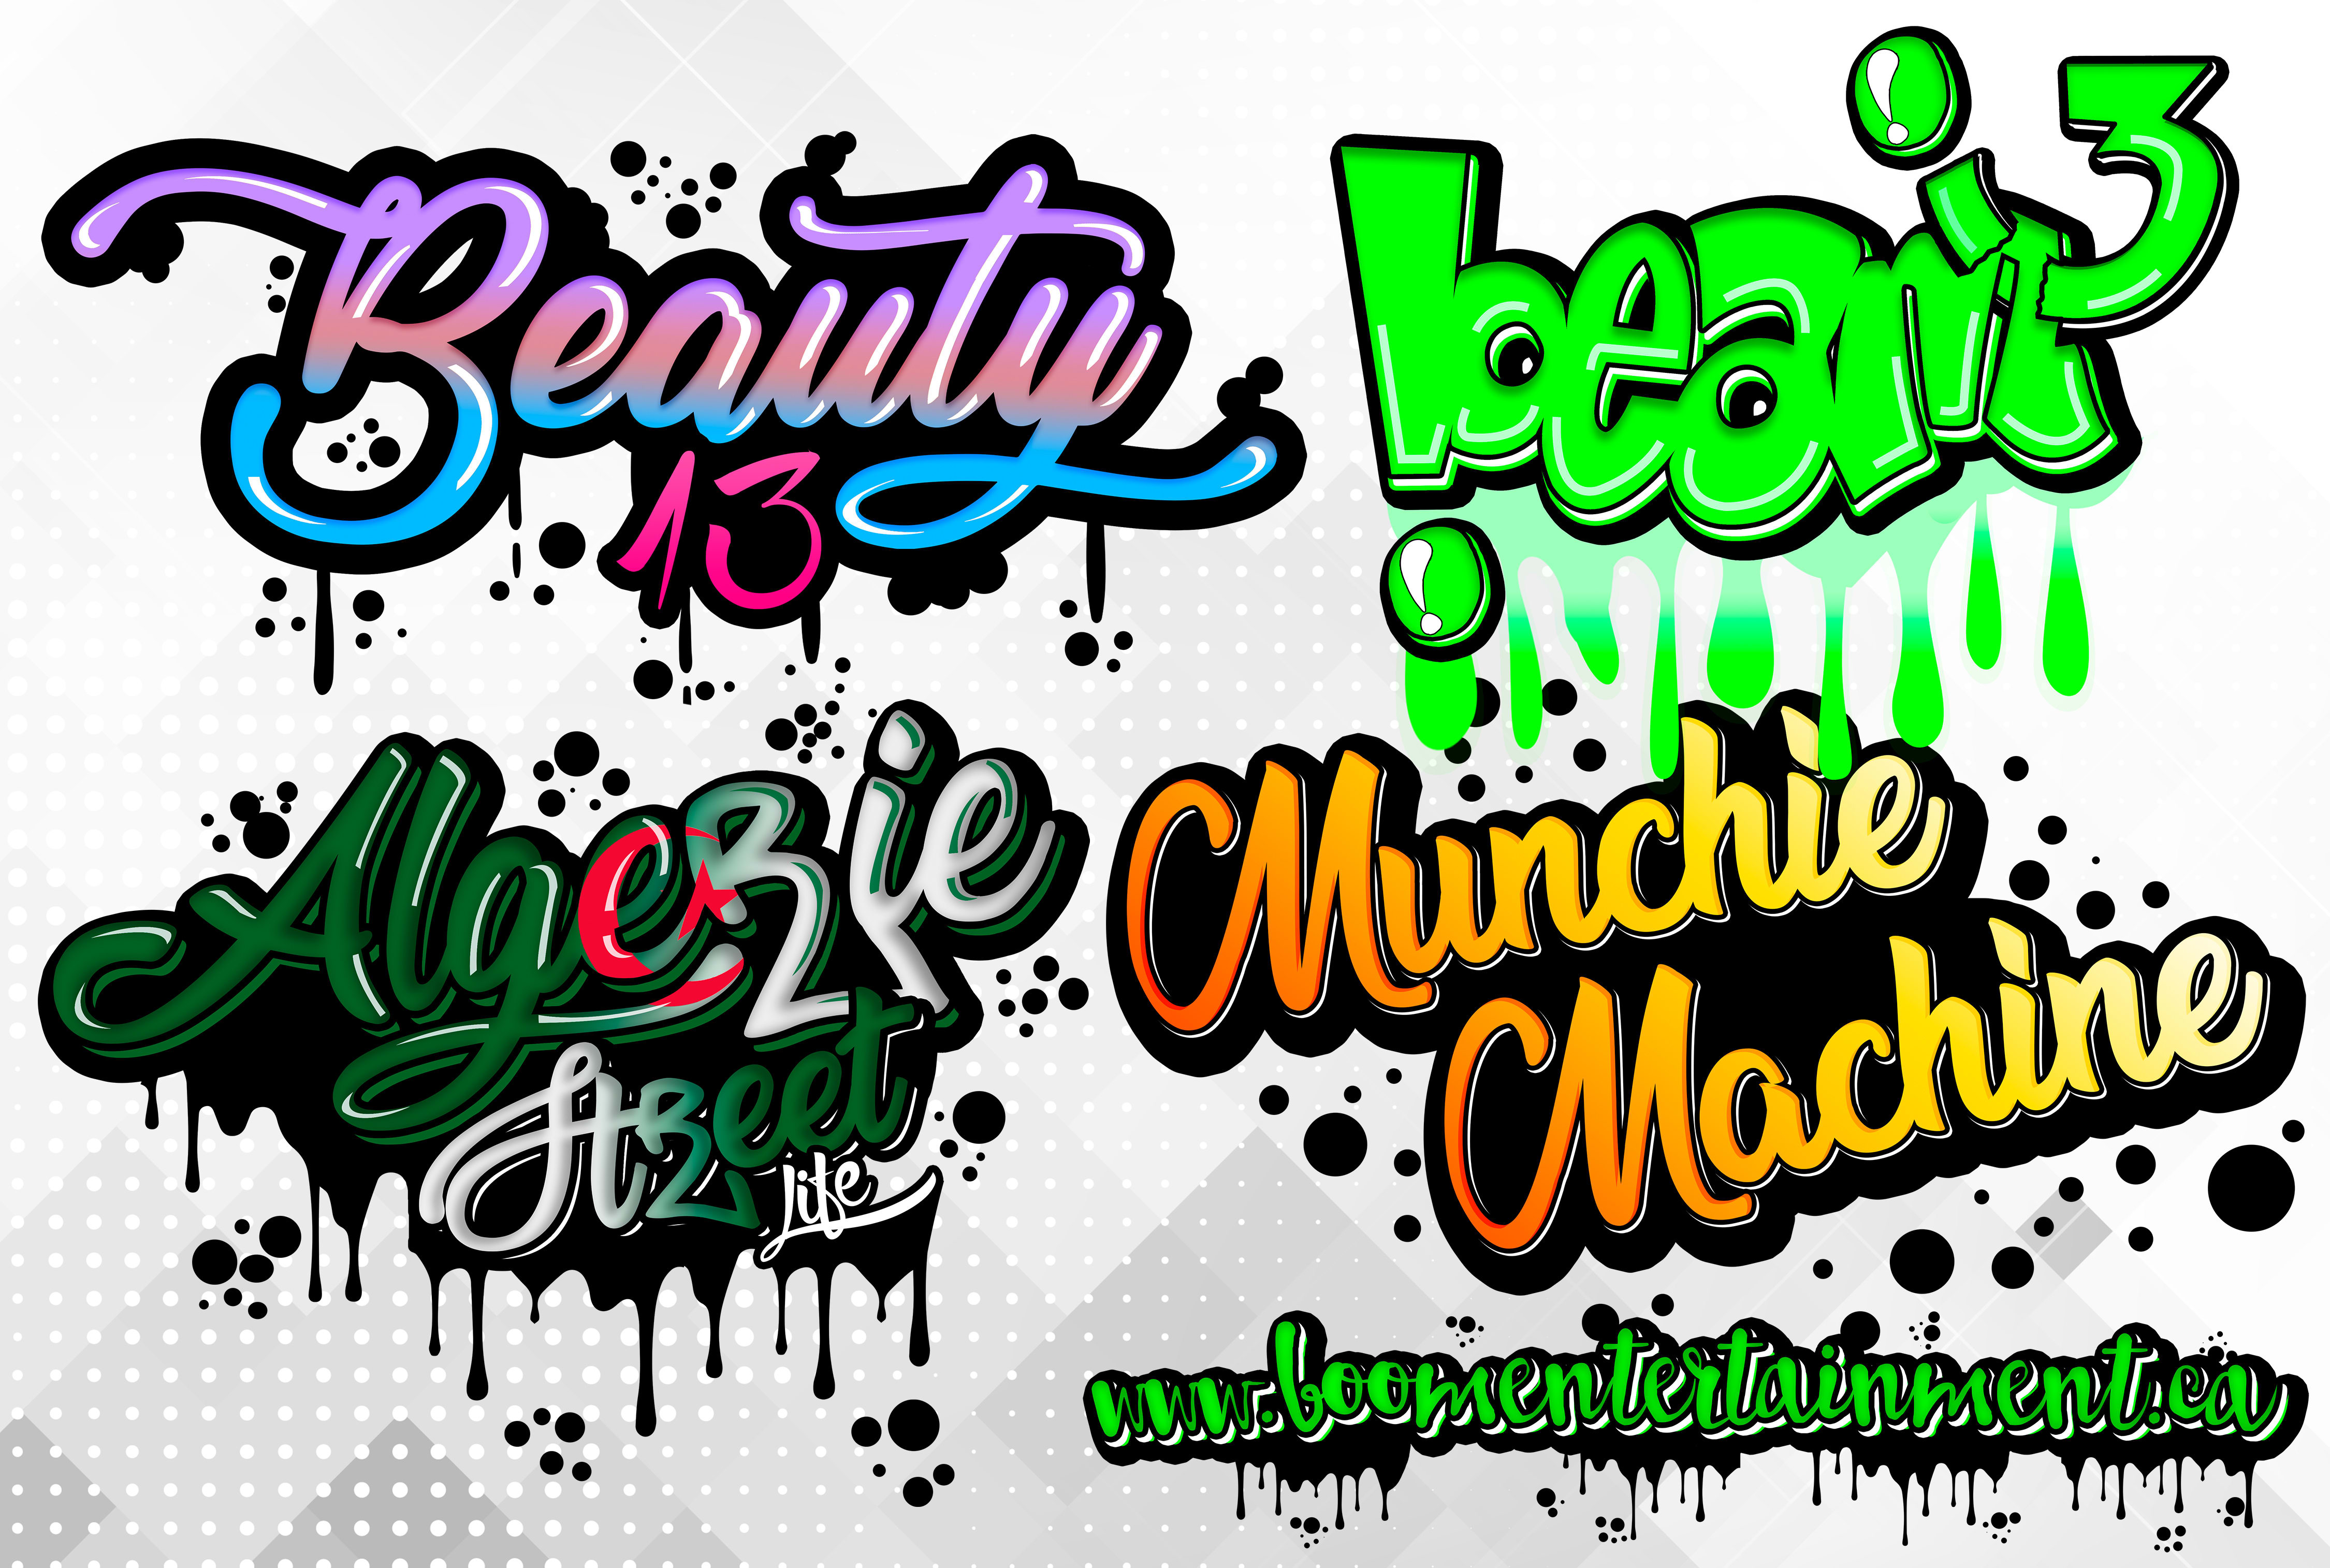 Do Professional Graffiti Art Letters For Your Logo Or Brand By Tshirt Dexigner Fiverr